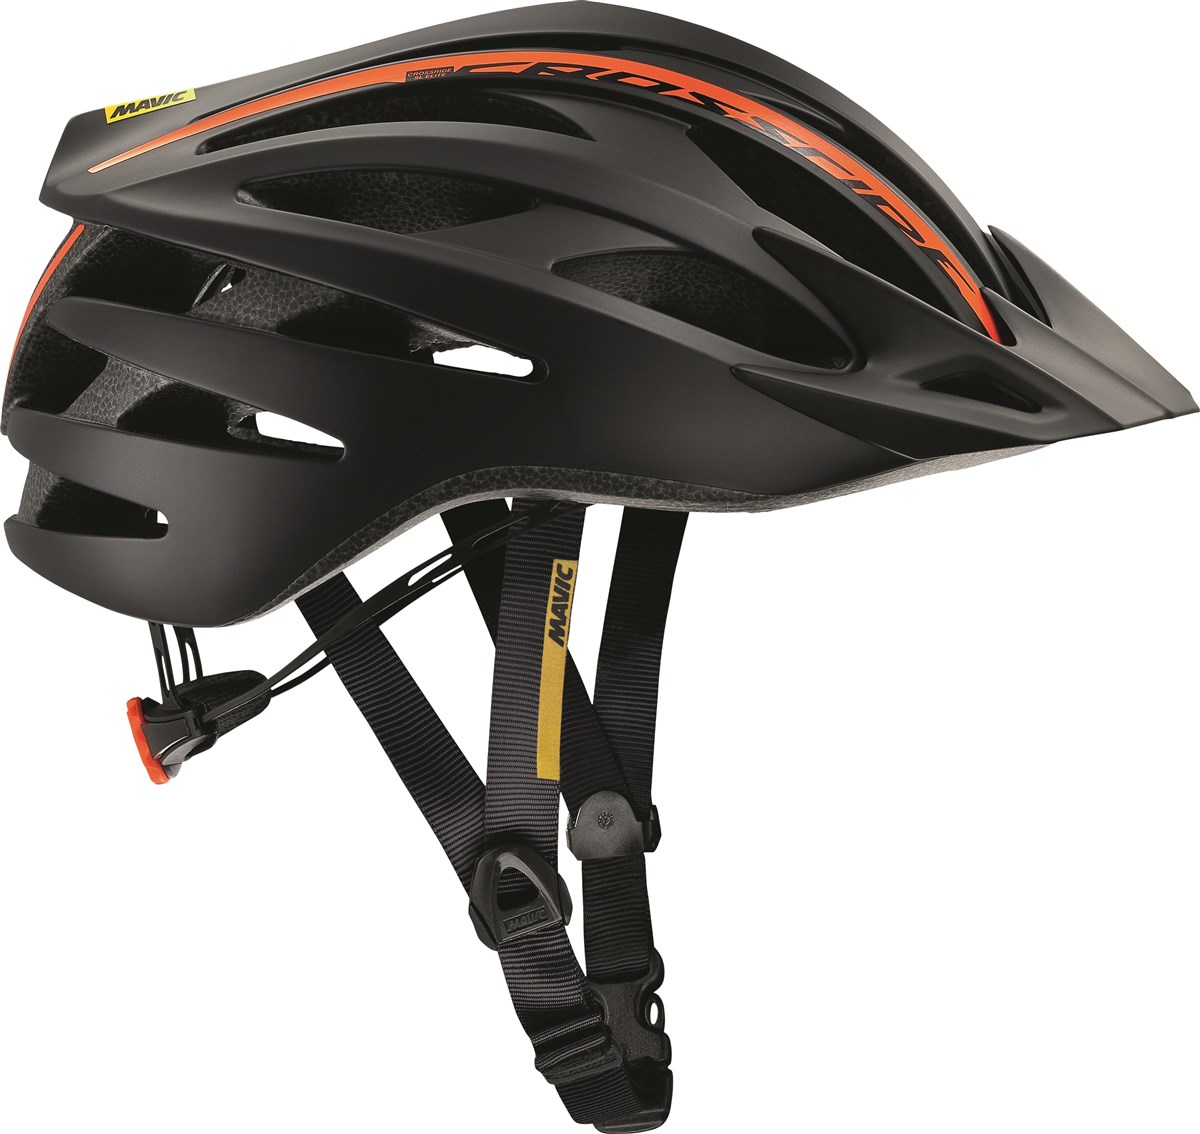 Mavic Crossride SL Elite MTB Cycling Helmet product image